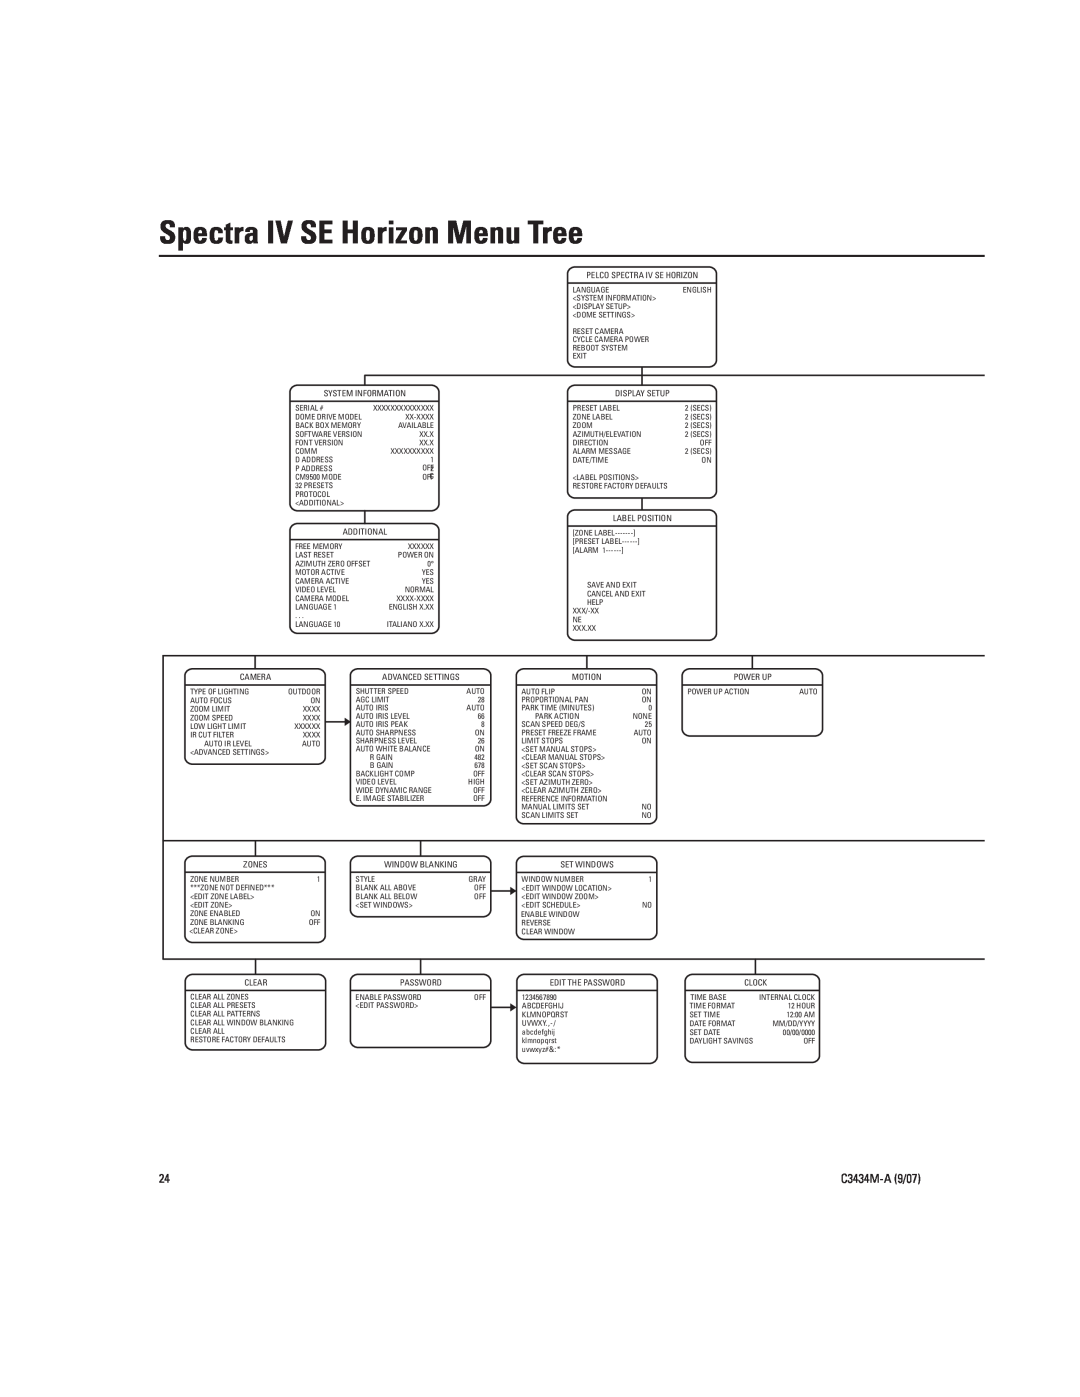 Pelco manual Spectra IV SE Horizon Menu Tree, C3434M-A9/07 